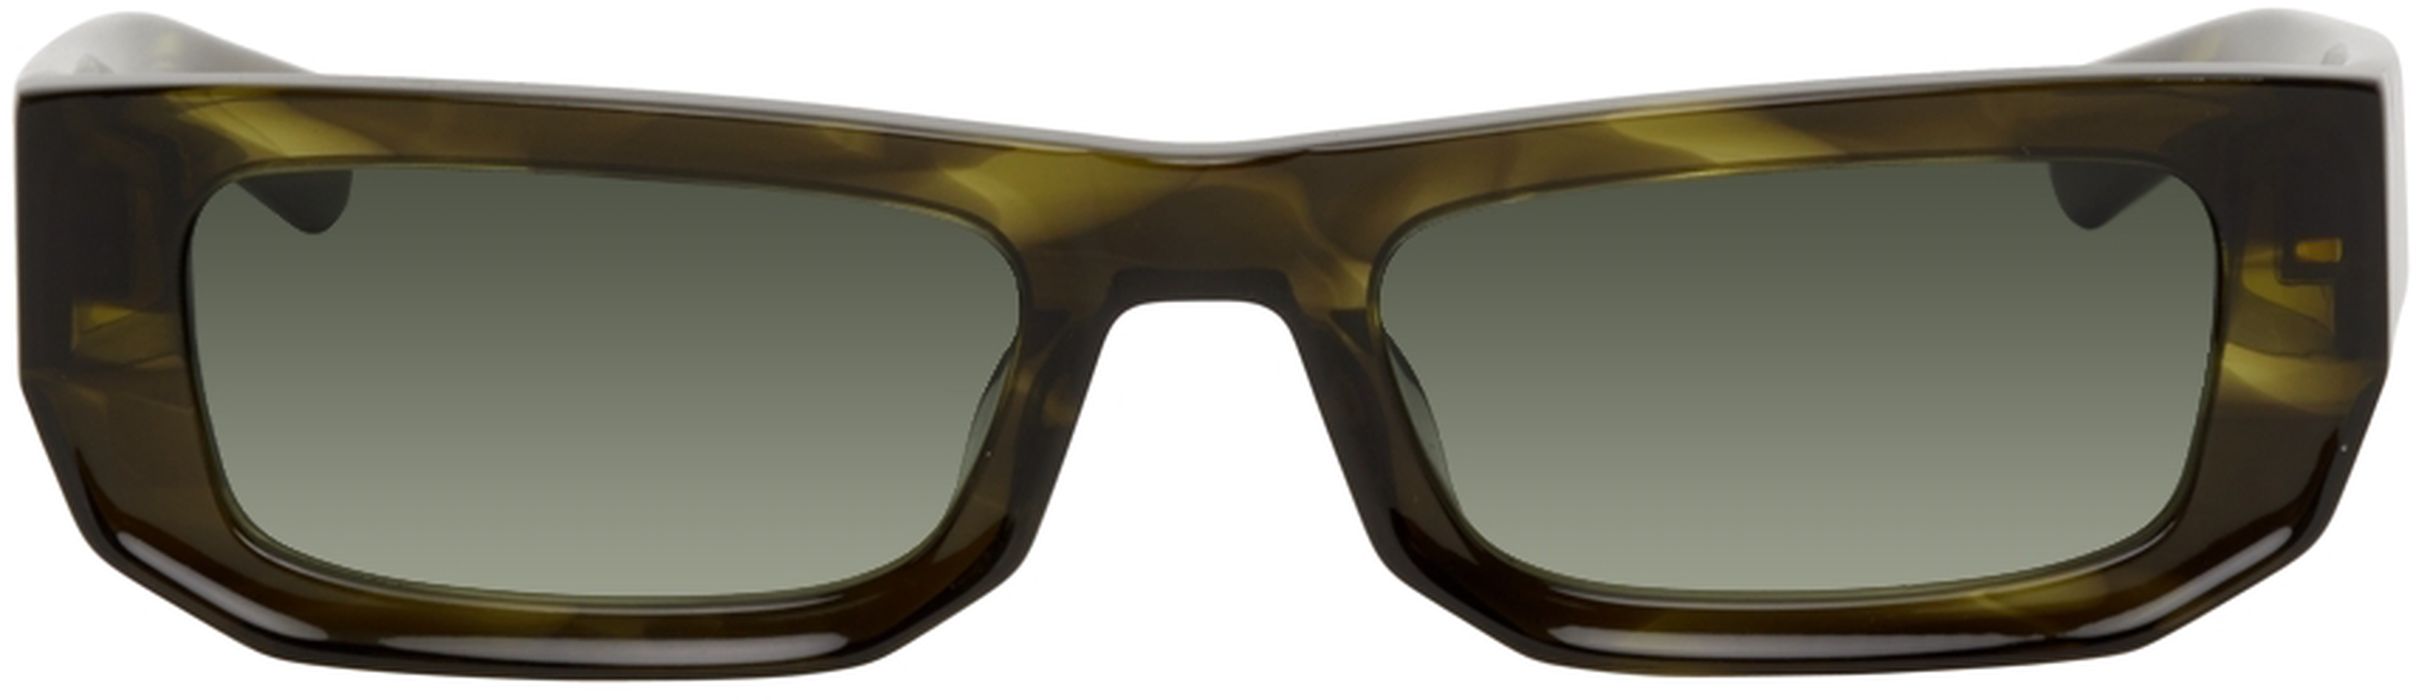 FLATLIST EYEWEAR Green Bricktop Sunglasses